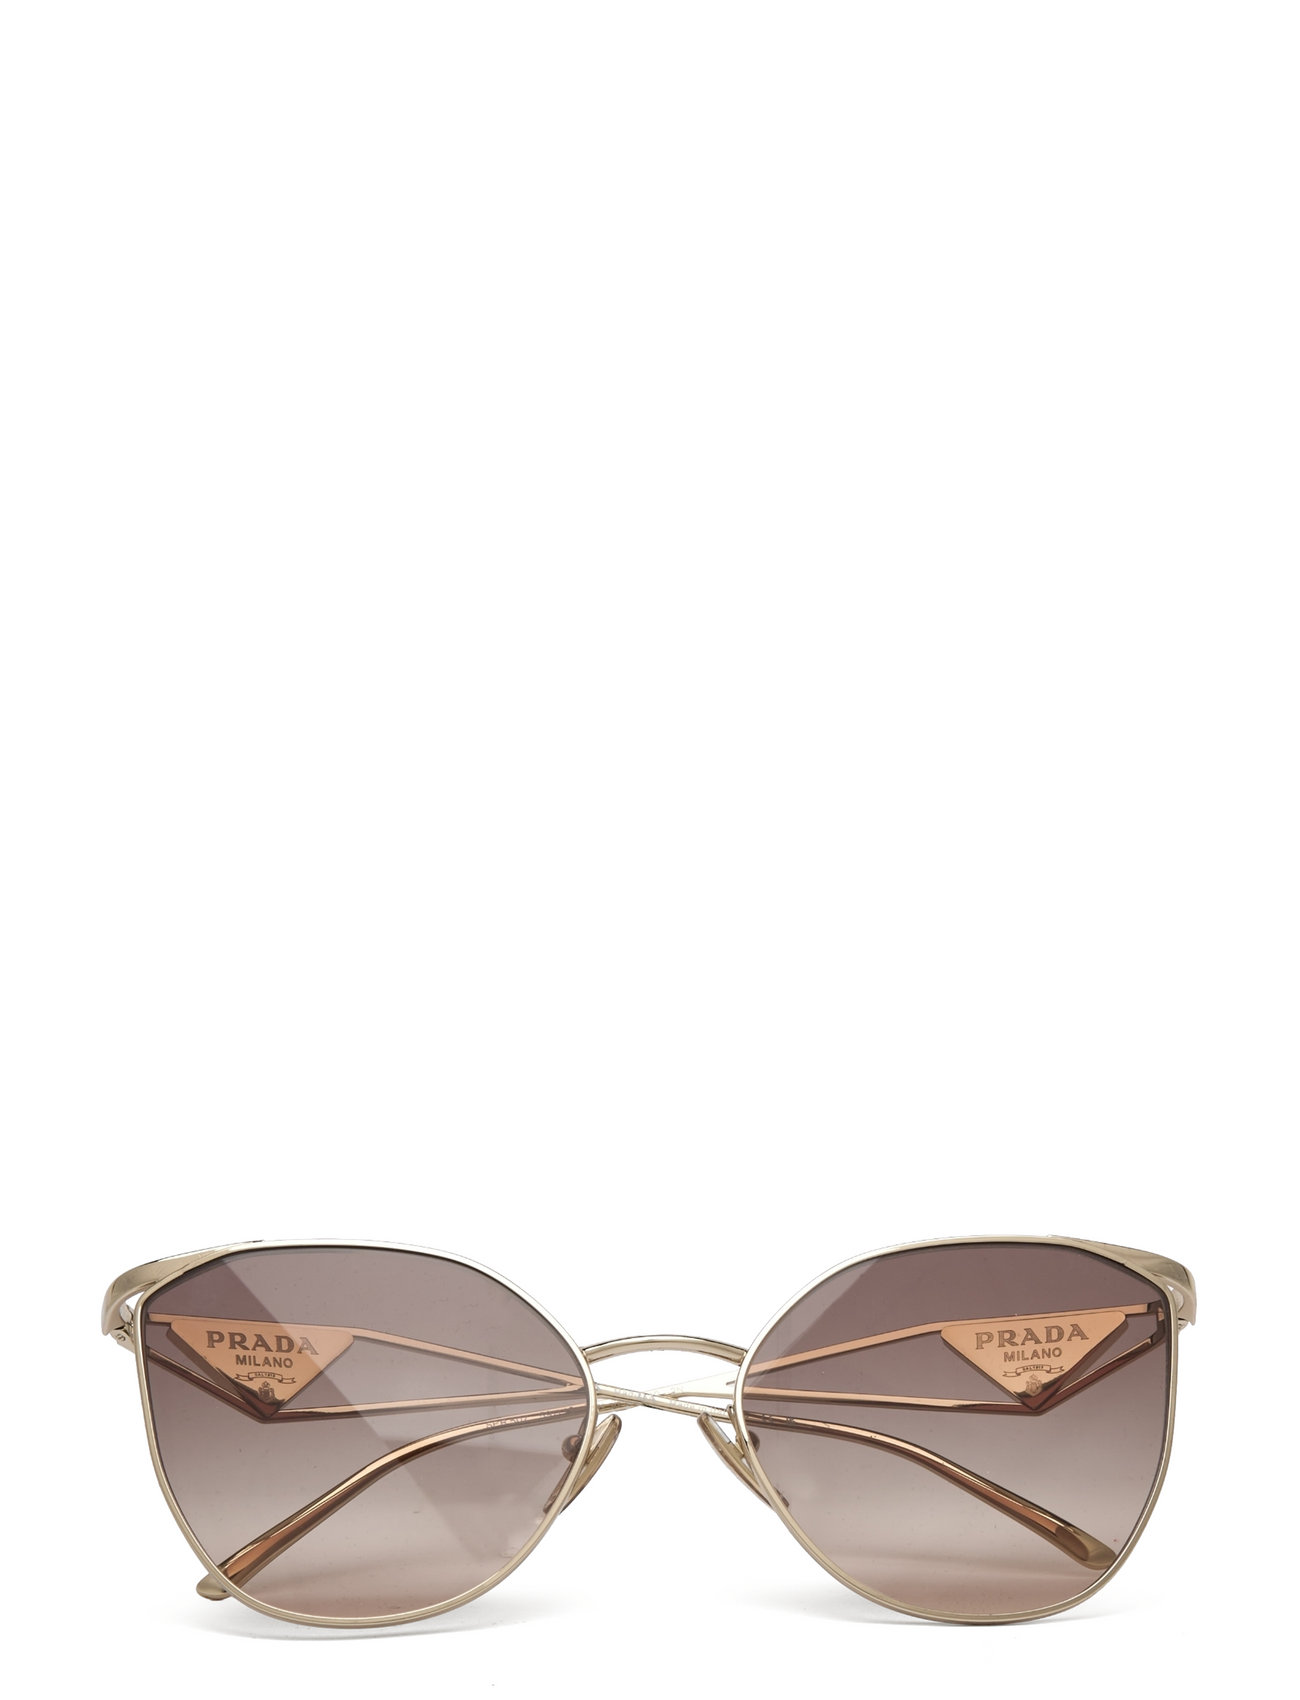 Allergisk Alle Elendighed Prada Sunglasses 0pr 50zs - Cat-Eye - Boozt.com